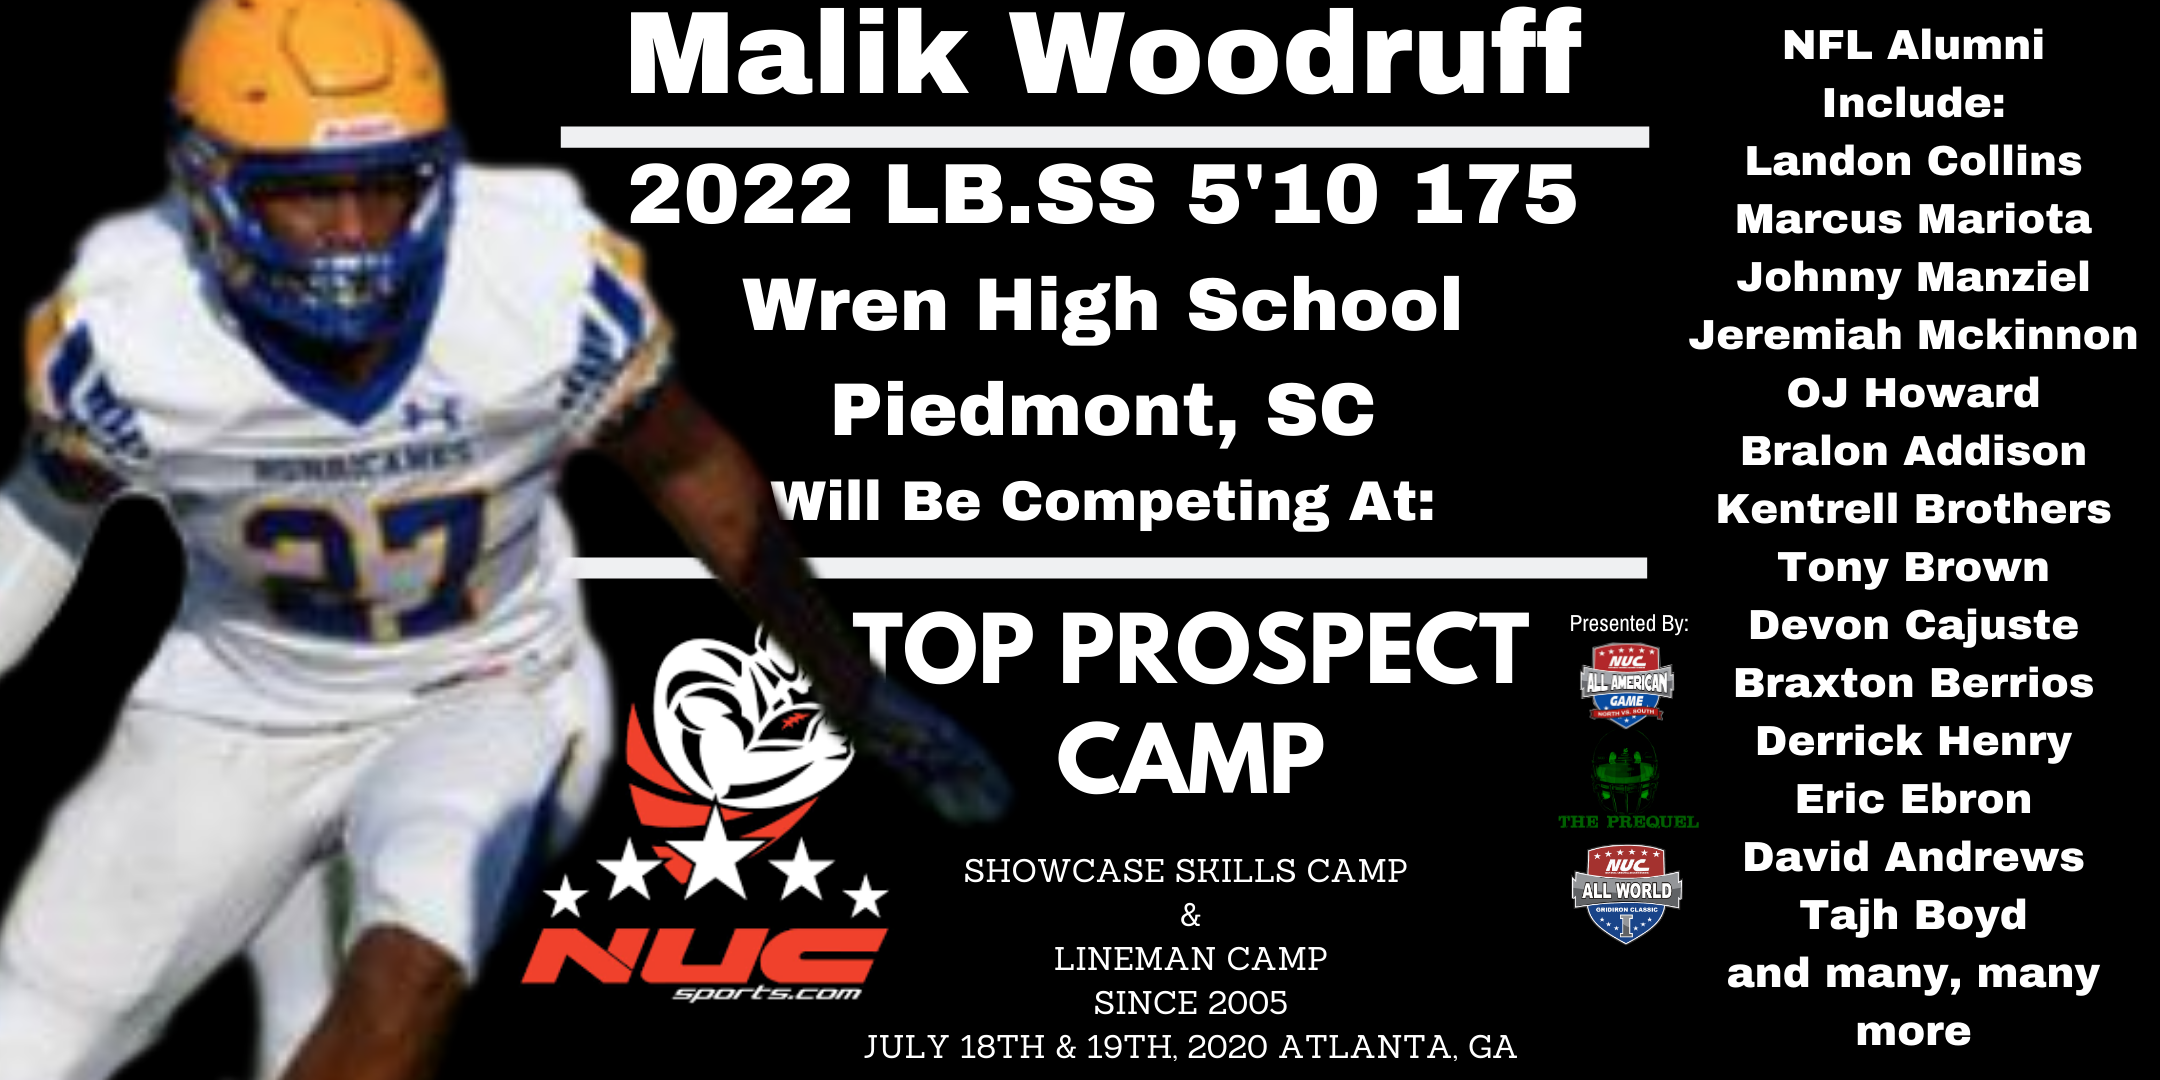 Top Prospect Camp Upcoming Attendee Malik Woodruff, Class of 2022, LB